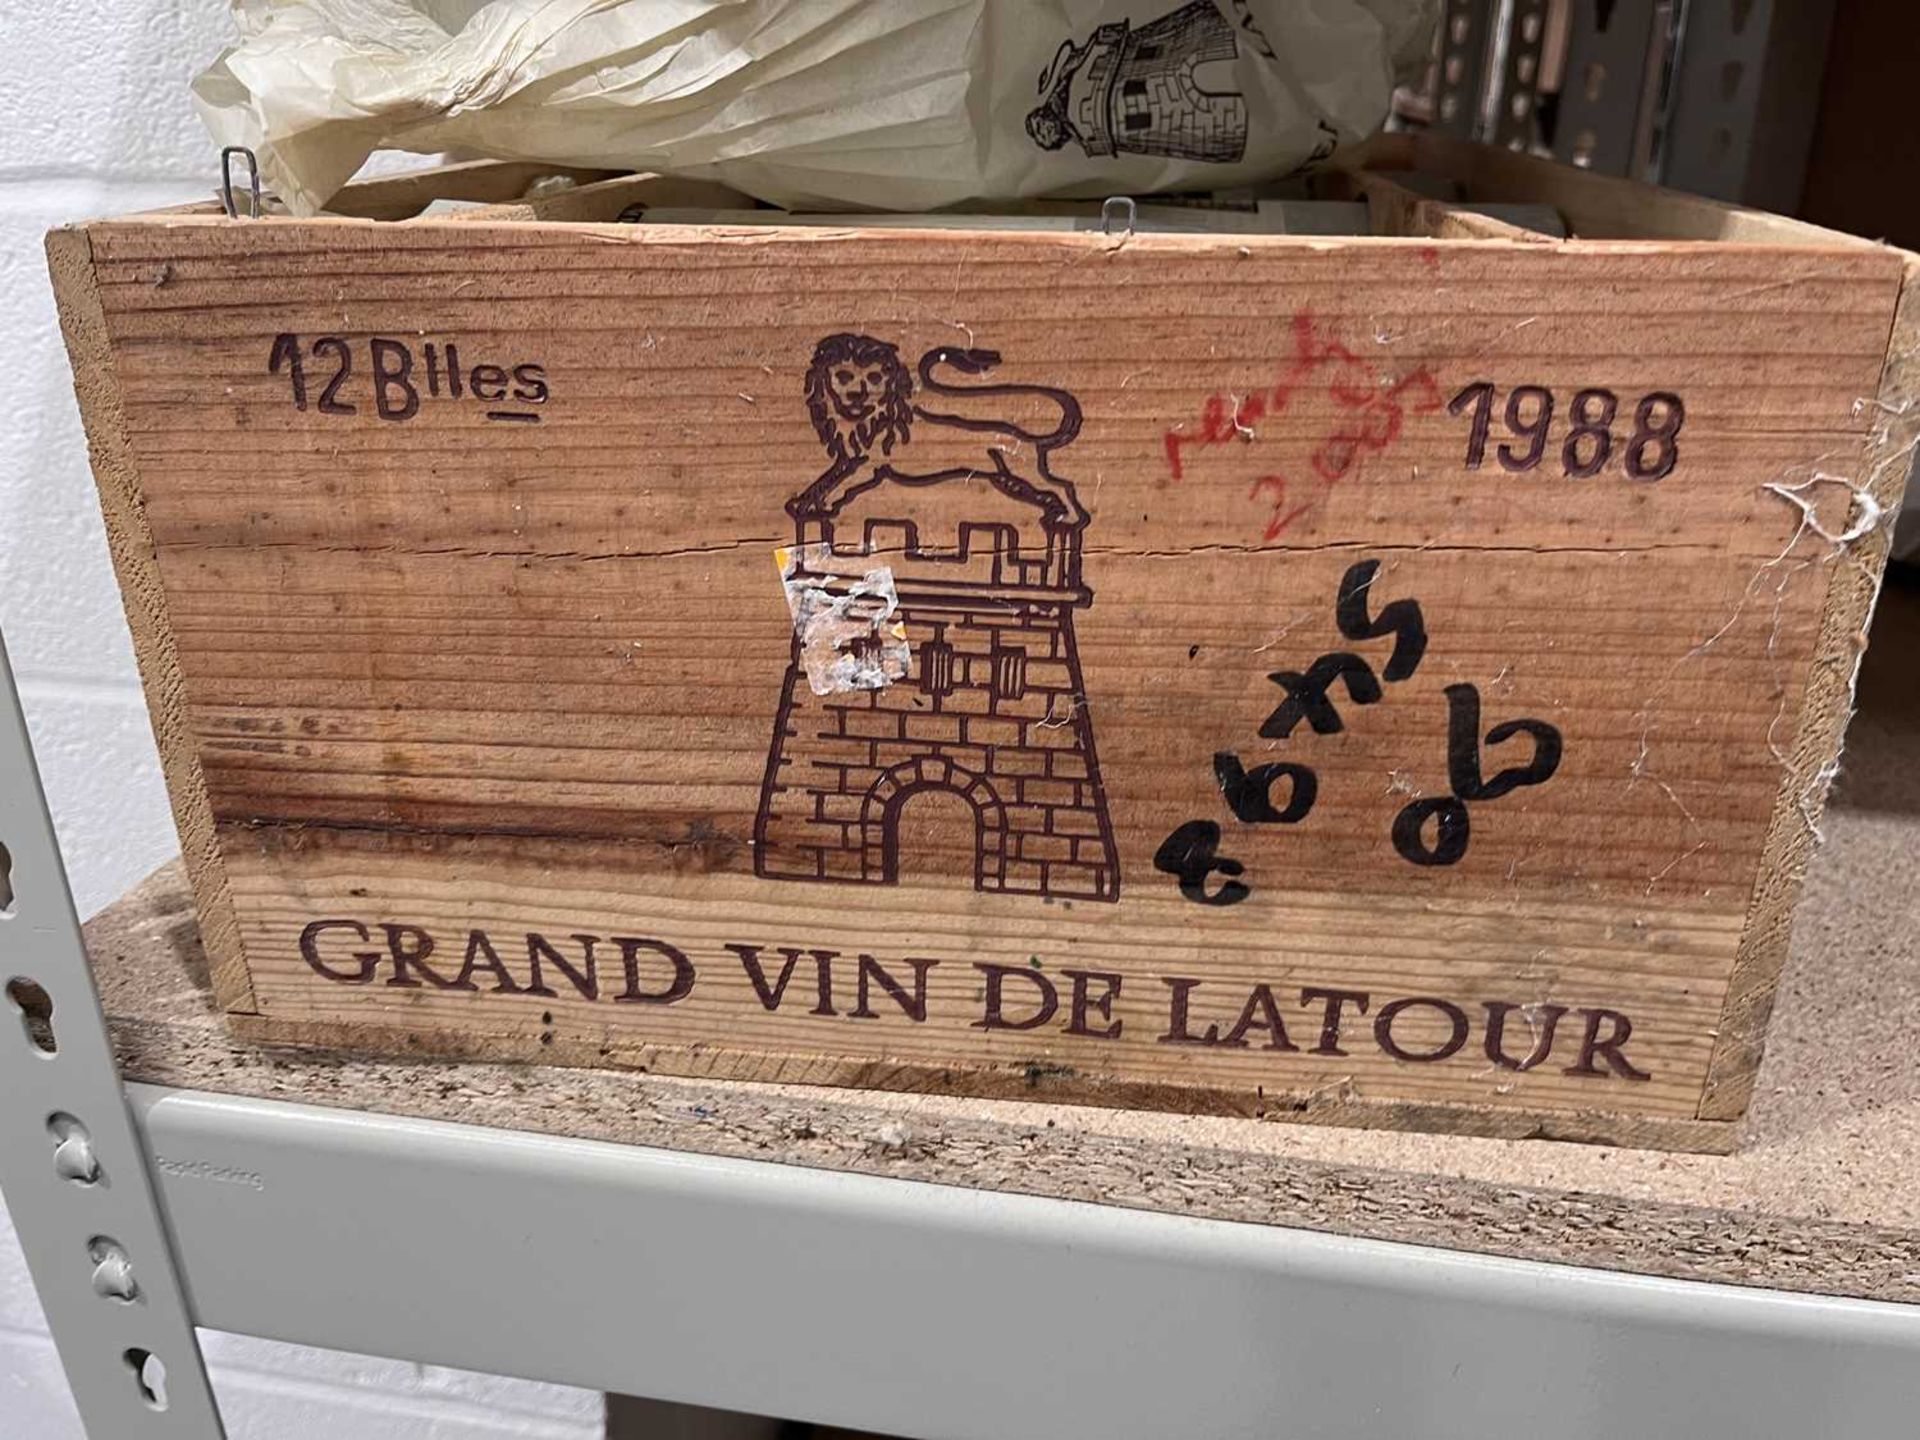 A twelve bottle case of Grand Vin de Chateau Latour, 1988, tissue wrapped bottles, ullage bottom - Image 4 of 21